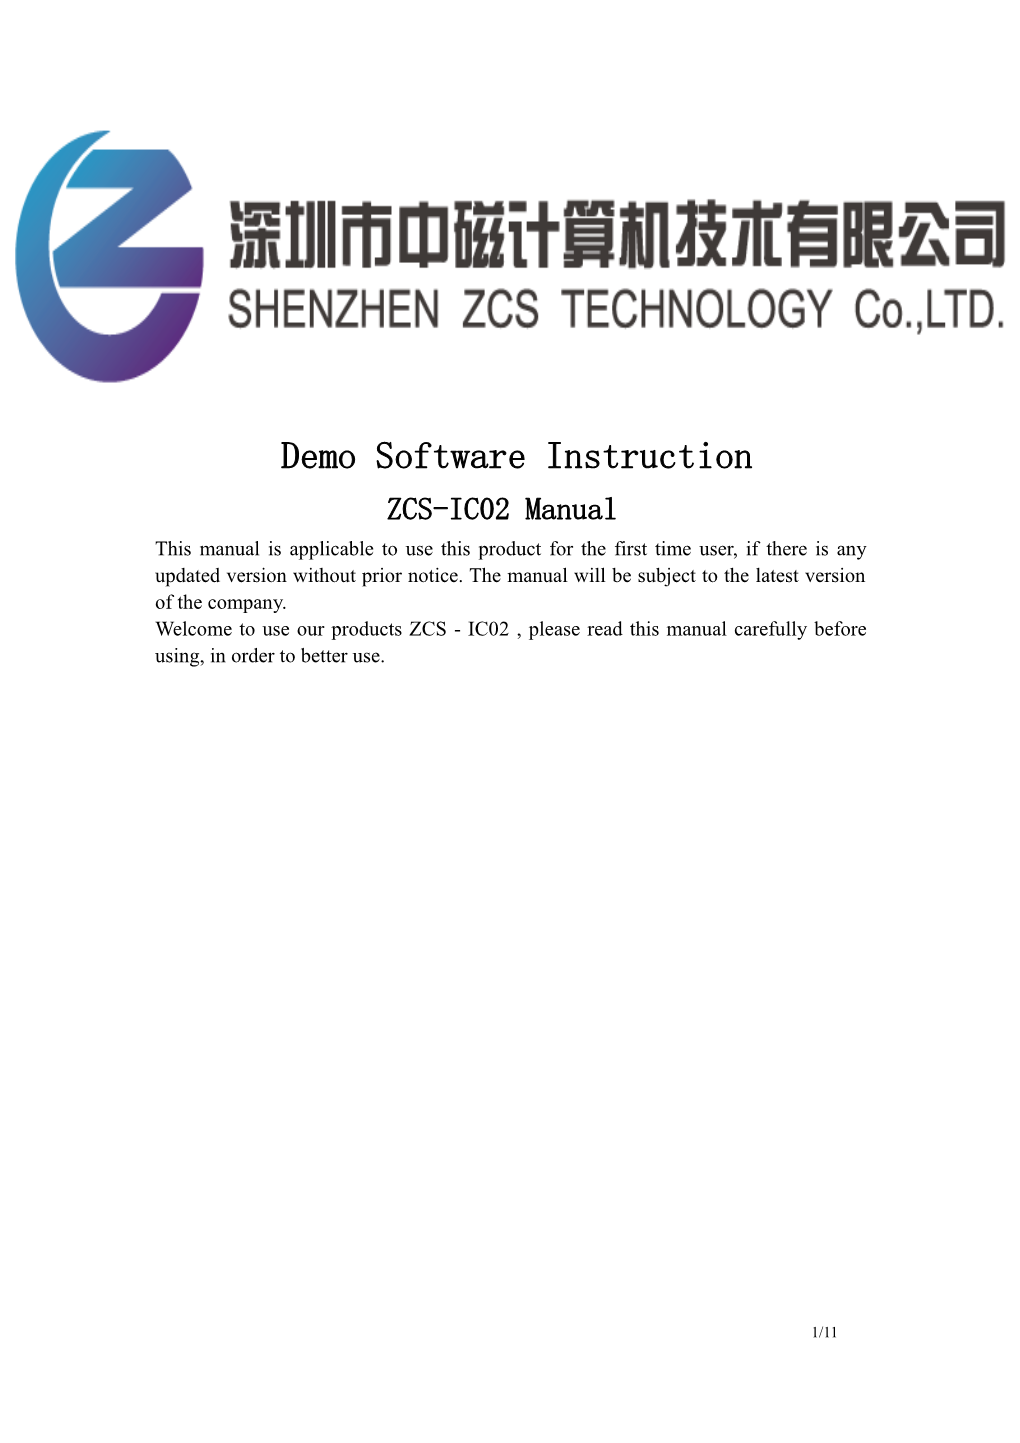 Demo Software Instruction